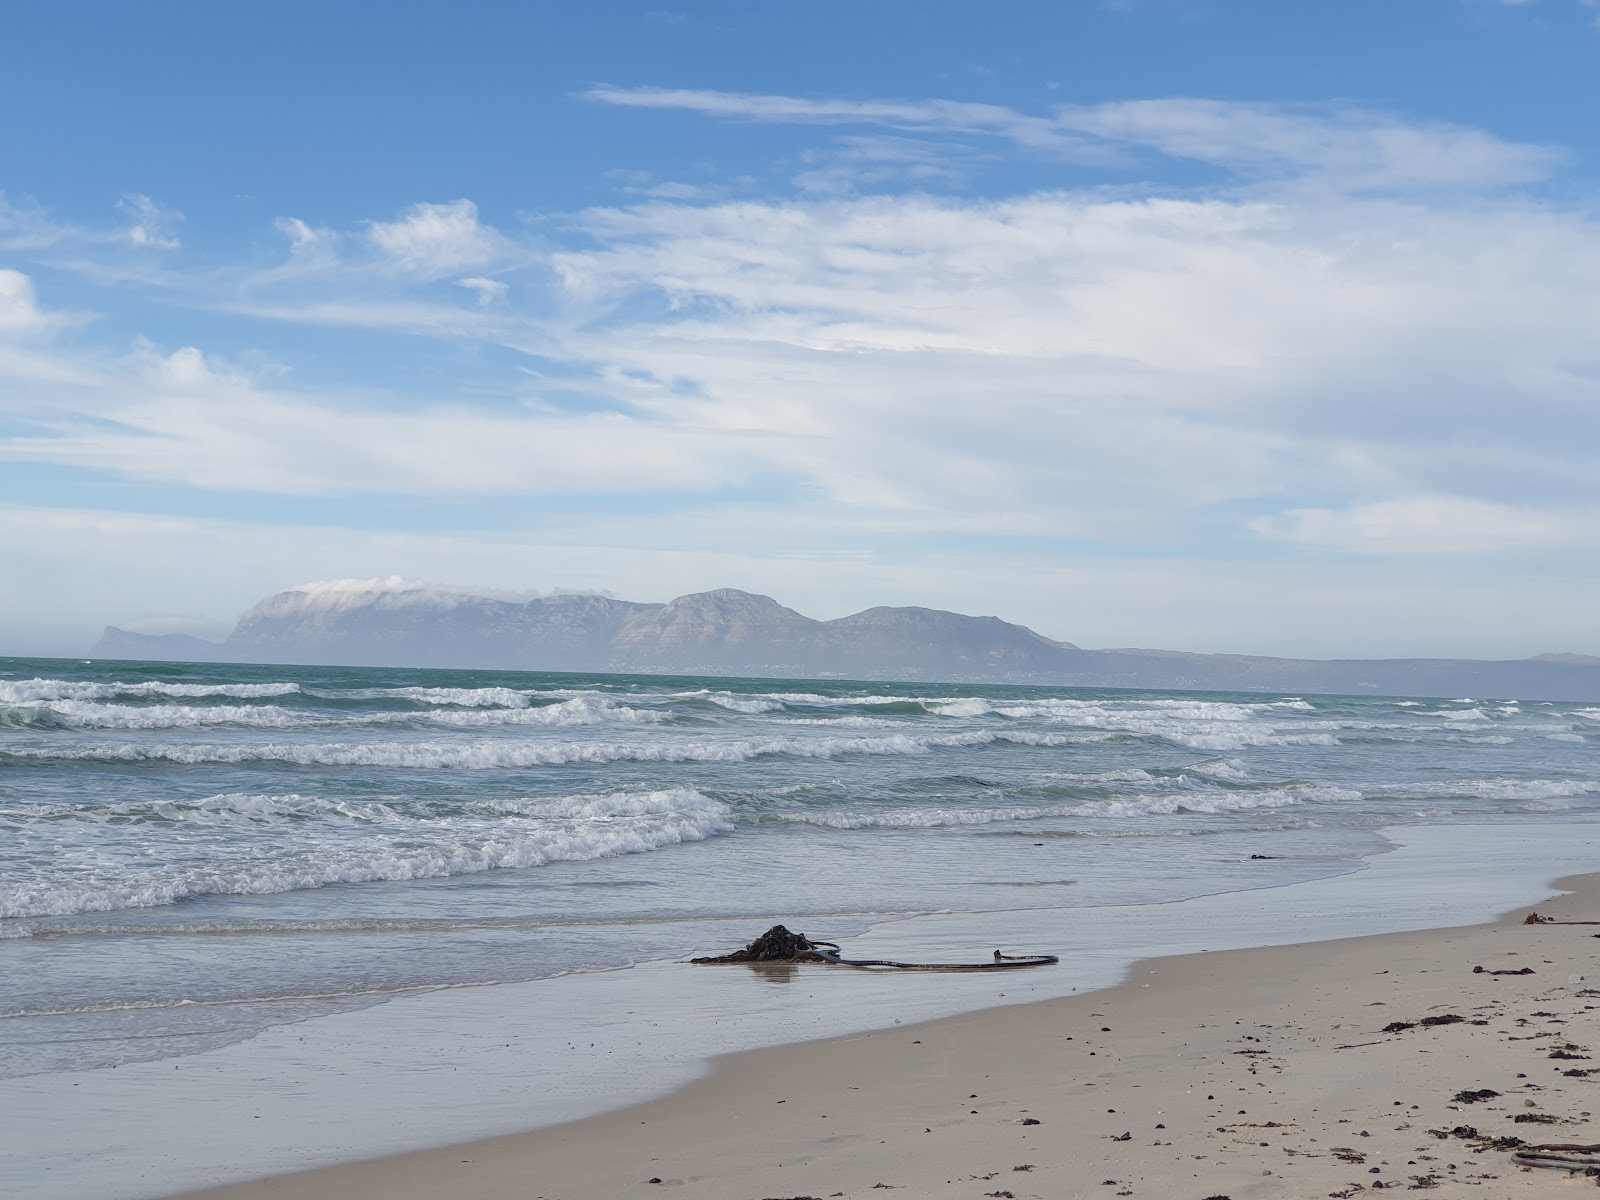 Strandfontein beach'in fotoğrafı turkuaz saf su yüzey ile